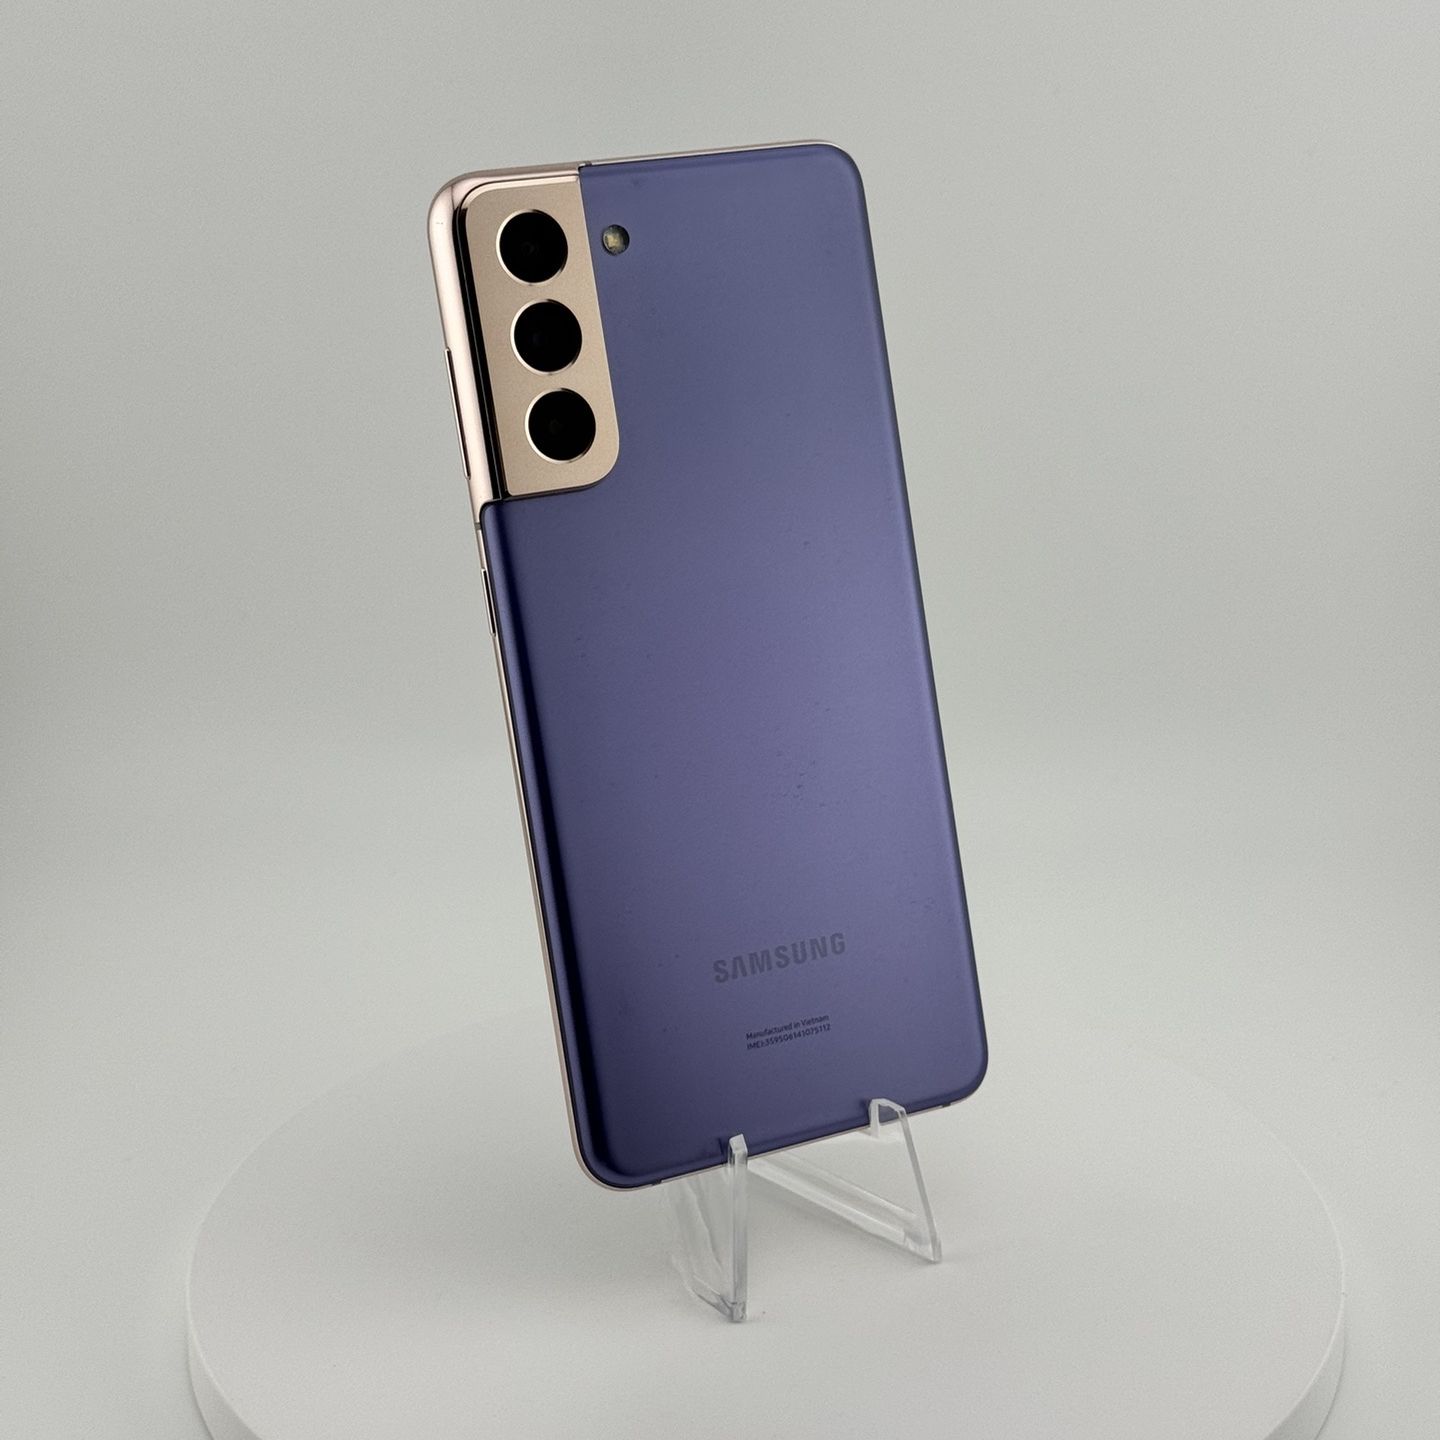 Samsung Galaxy S21 5G 128 GB Unlocked (Liberado) 